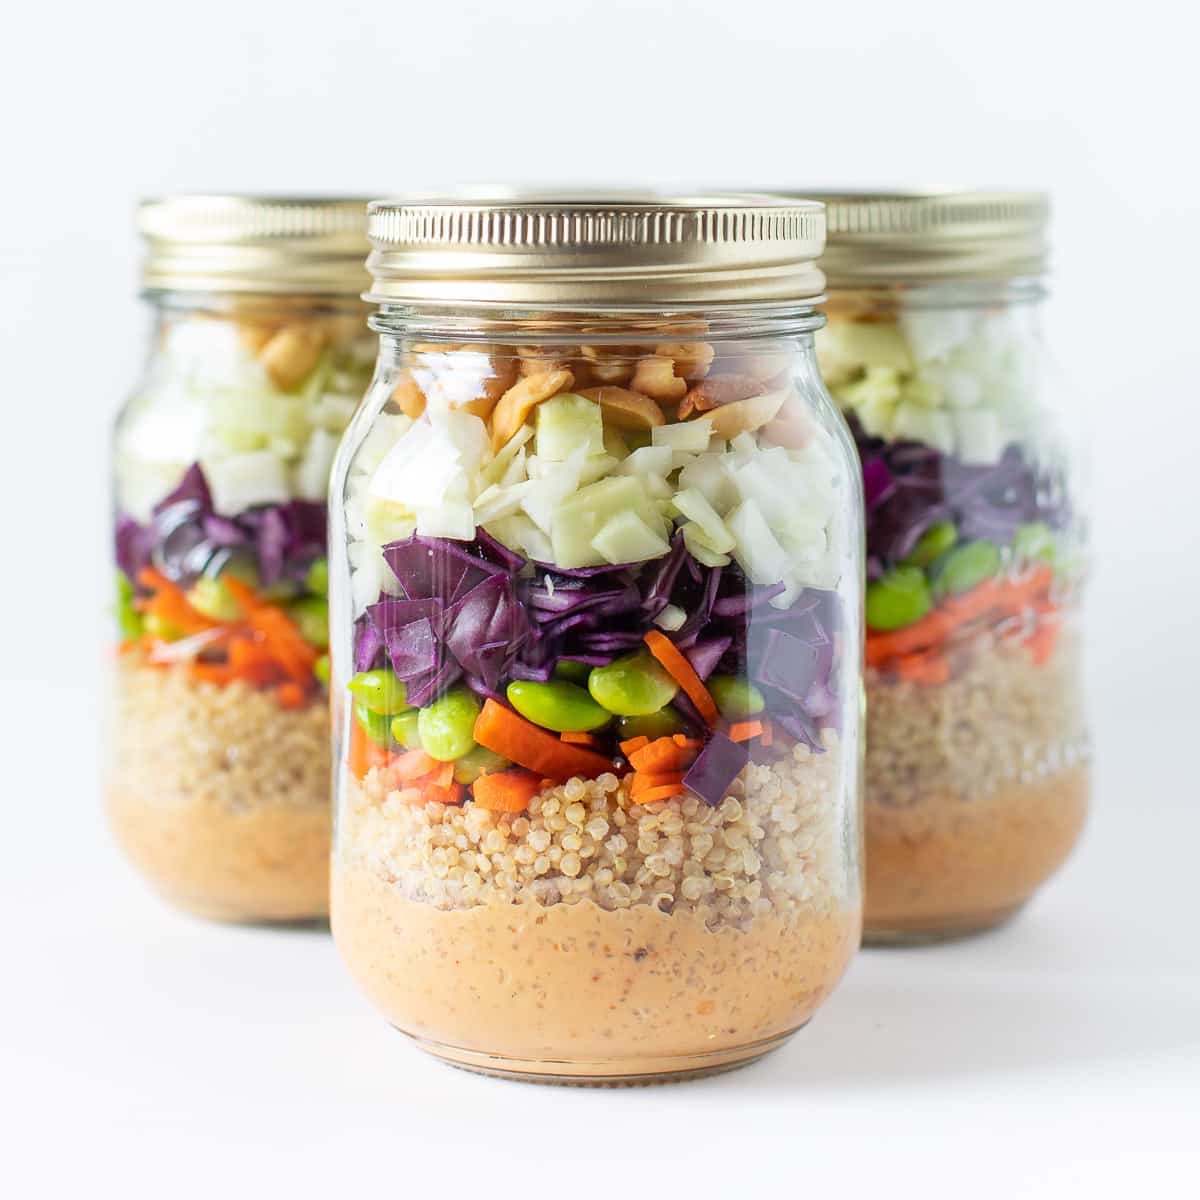 https://avirtualvegan.com/wp-content/uploads/2022/05/Peanut-Crunch-Salad-in-a-Jar-A-Virtual-Vegan-3.jpg